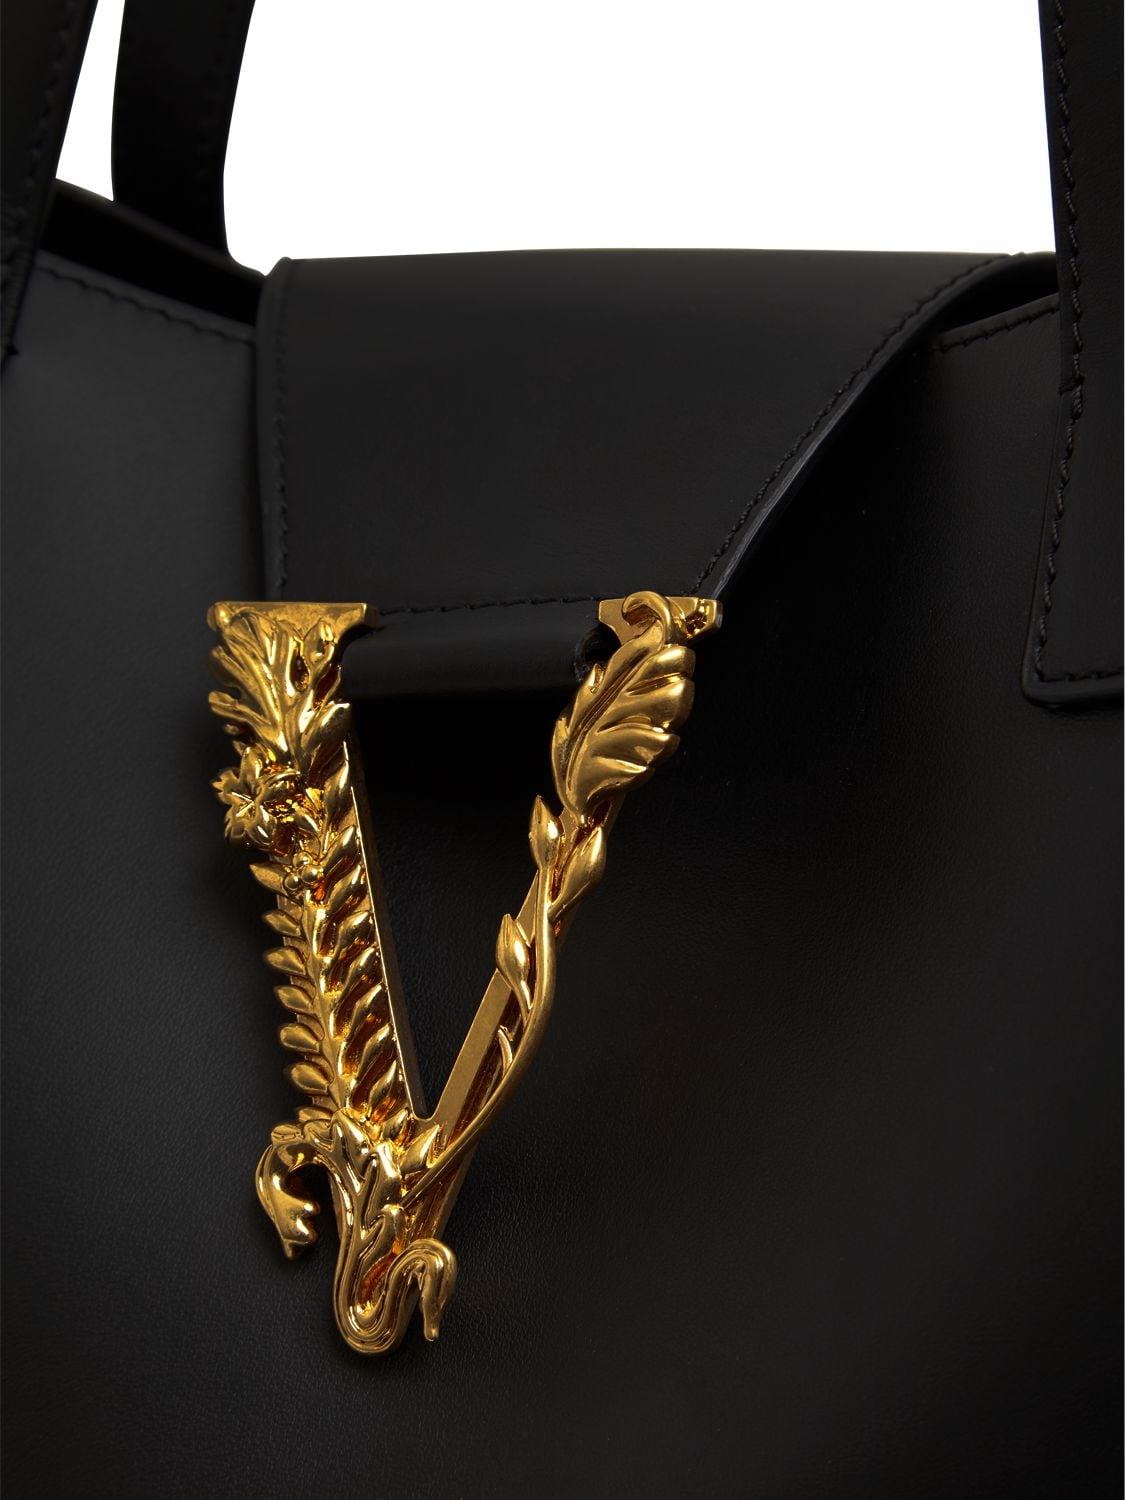 Versace Outlet: Virtus leather bag - Black  Versace crossbody bags DBFH316  D5VIT online at